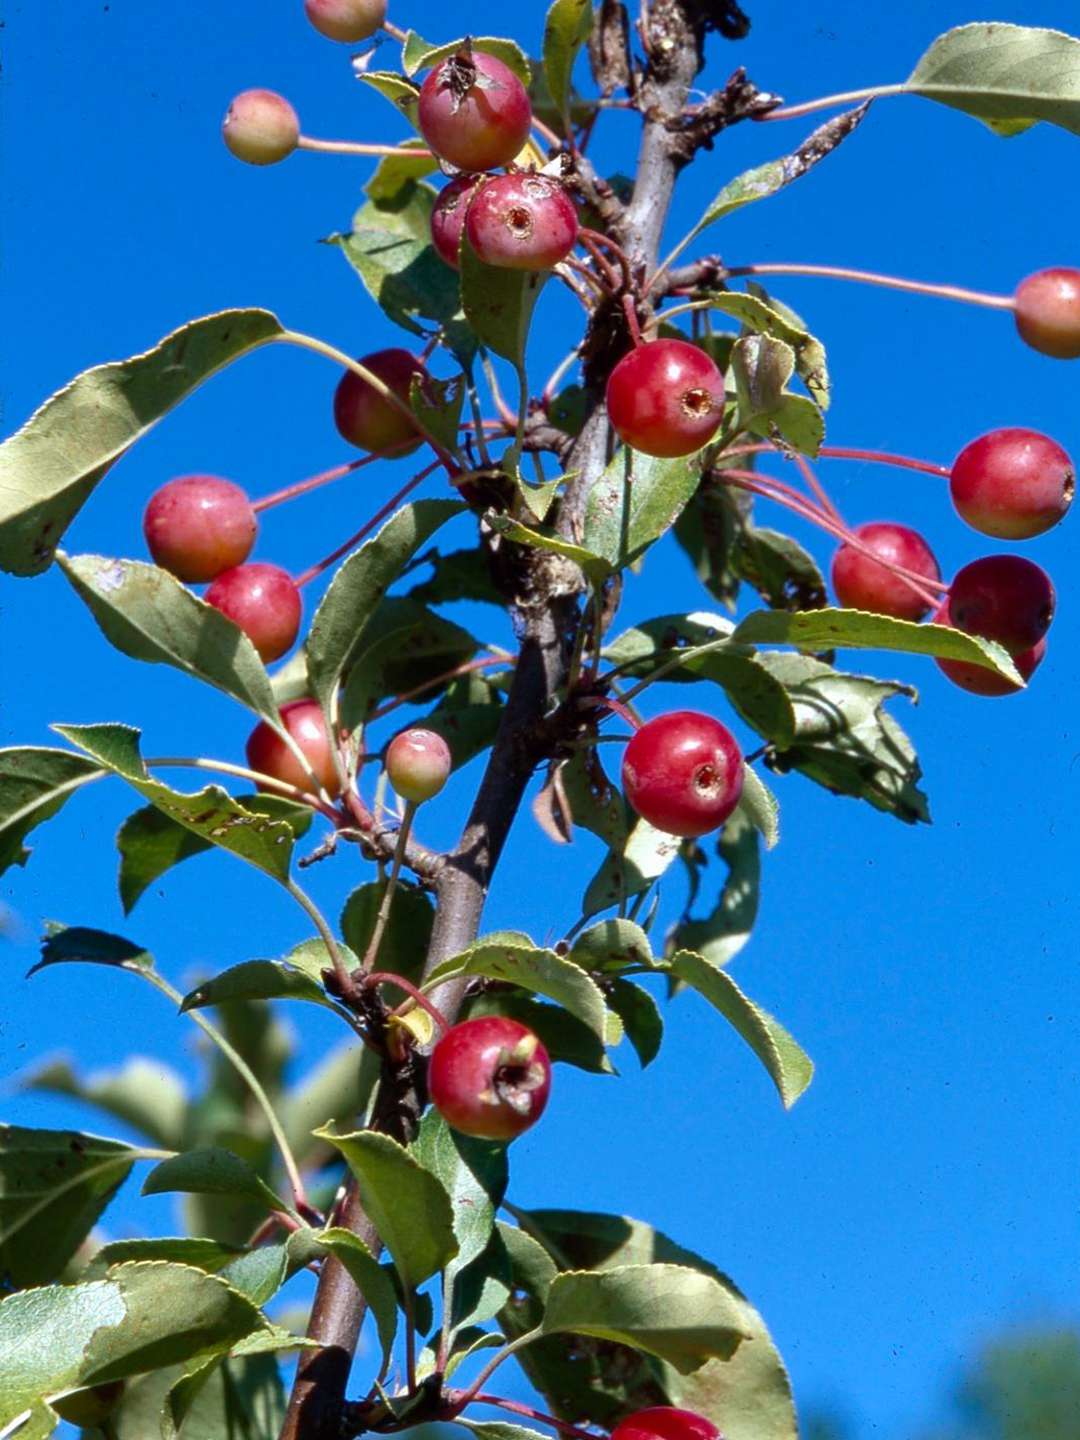 Adirondack crabapple fruits on branch against deep blue sky